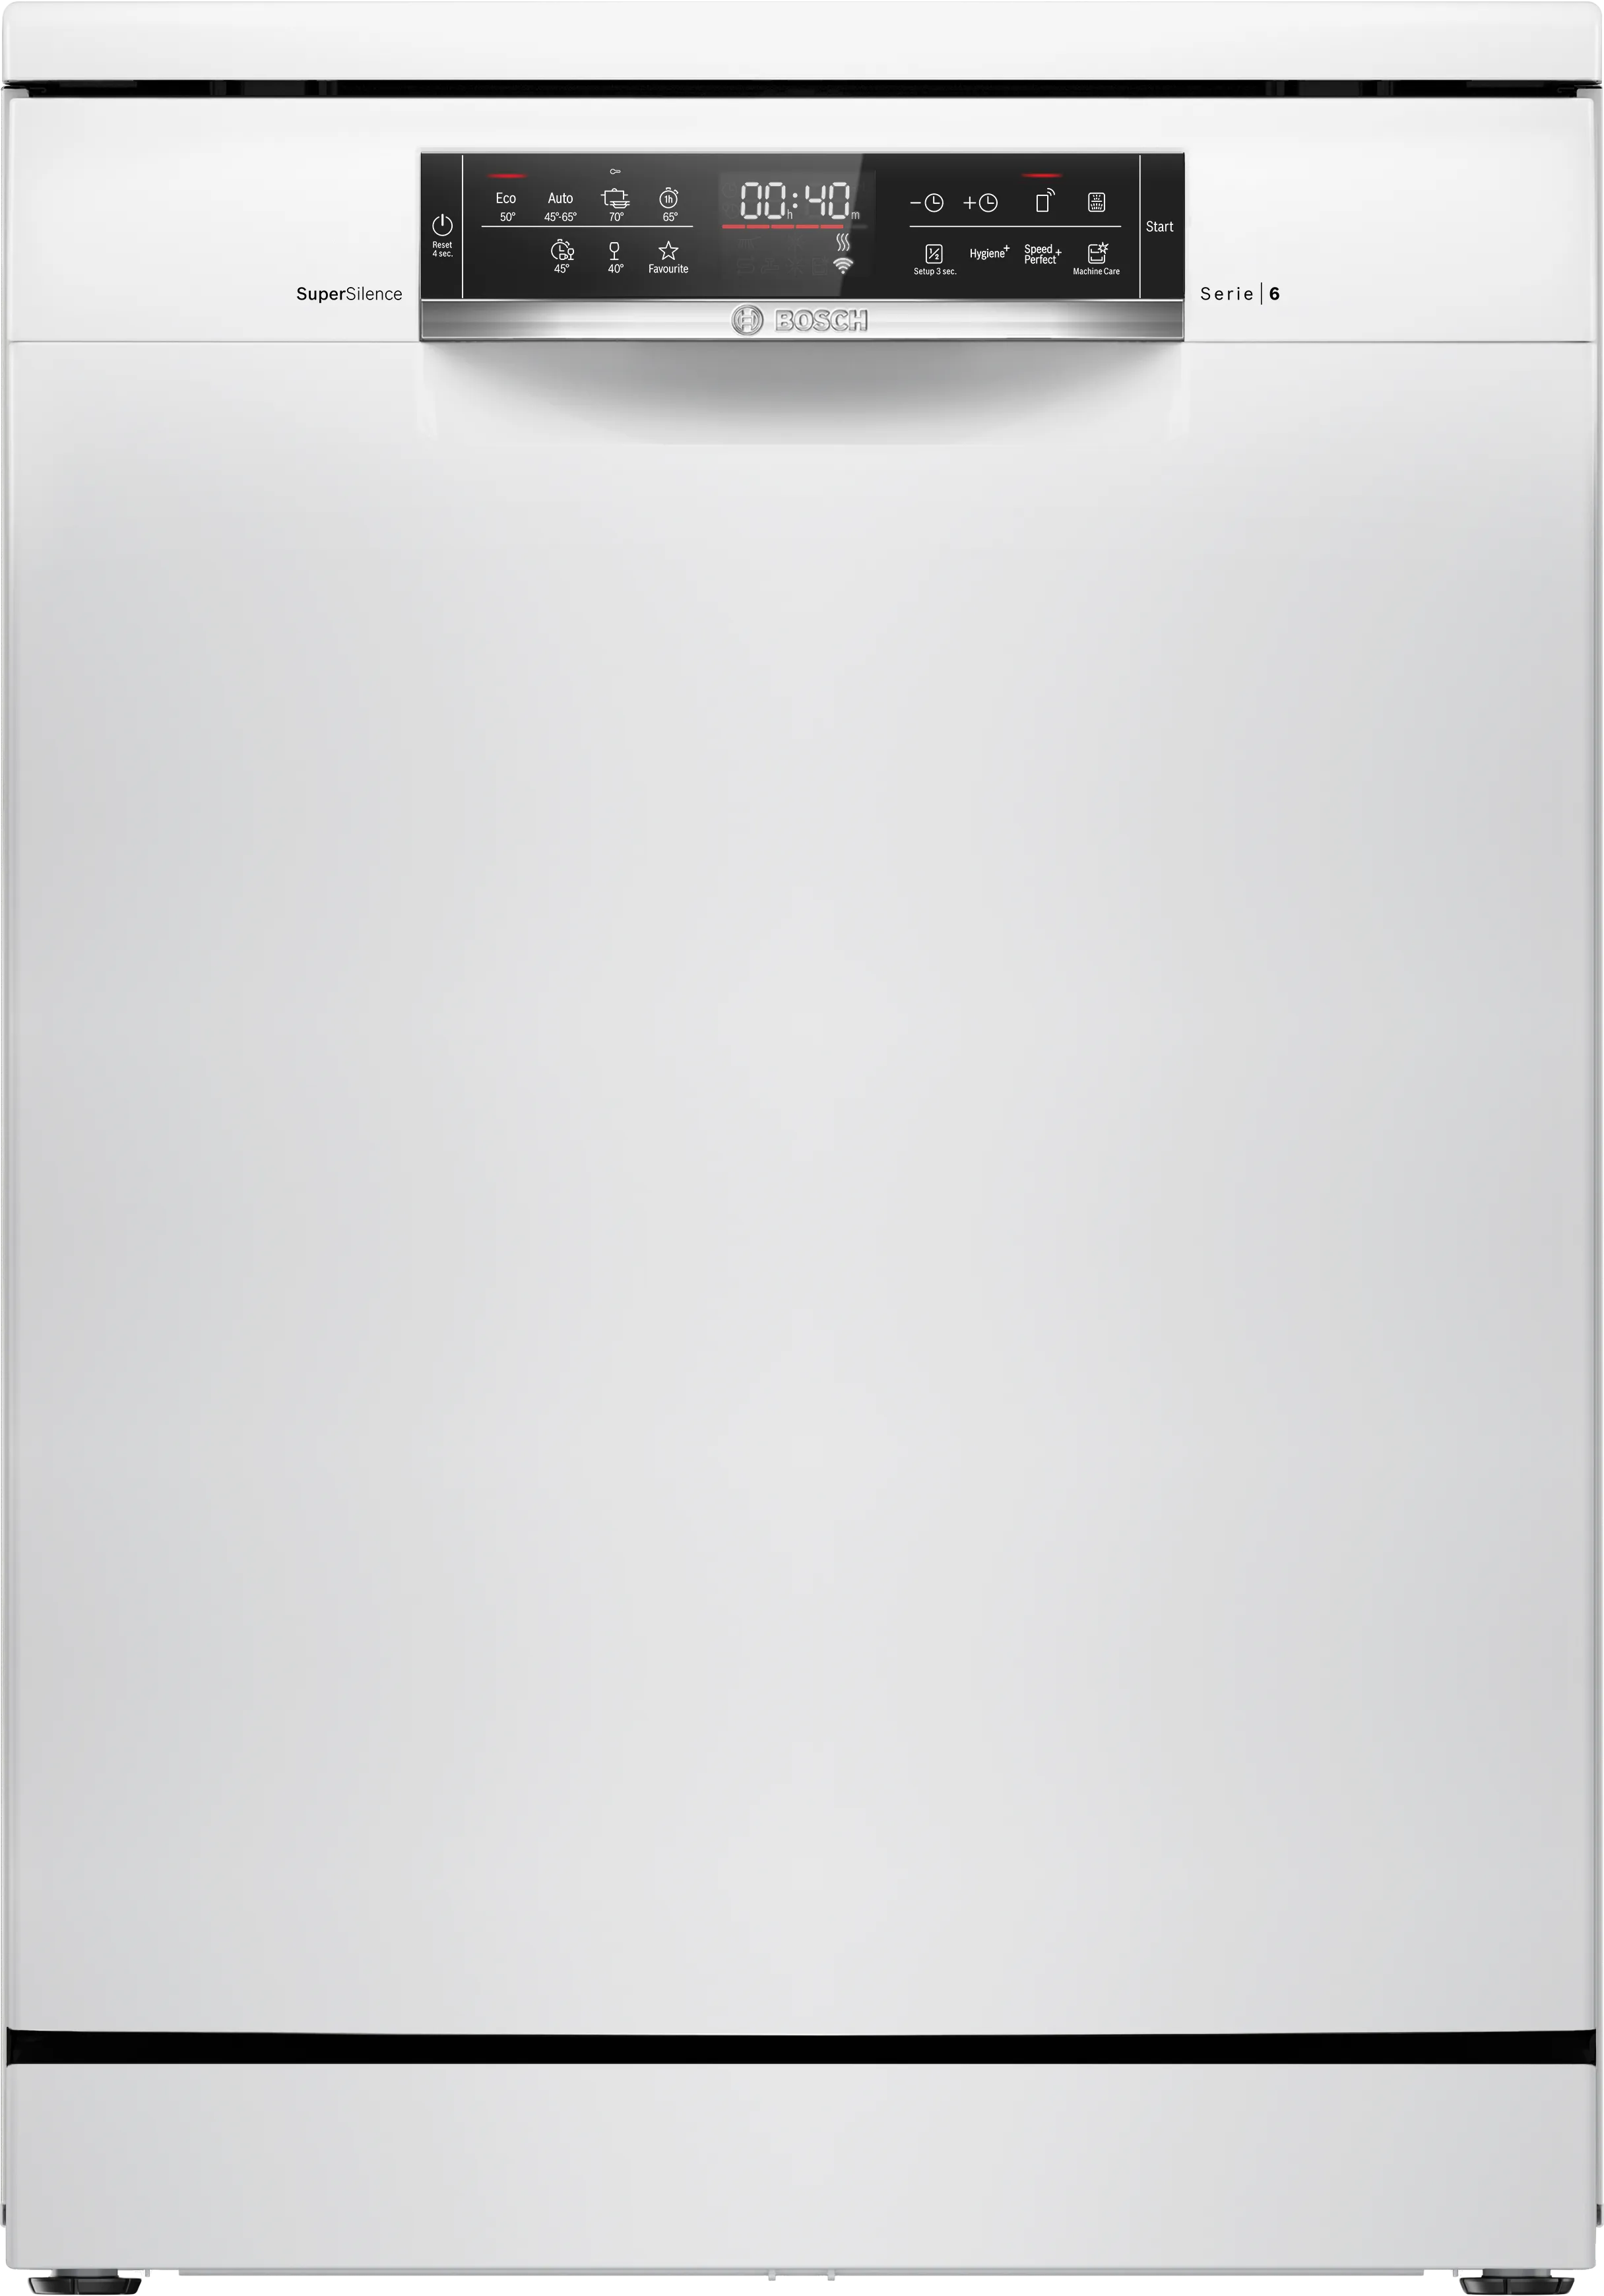 Series 6 free-standing dishwasher 60 cm White 